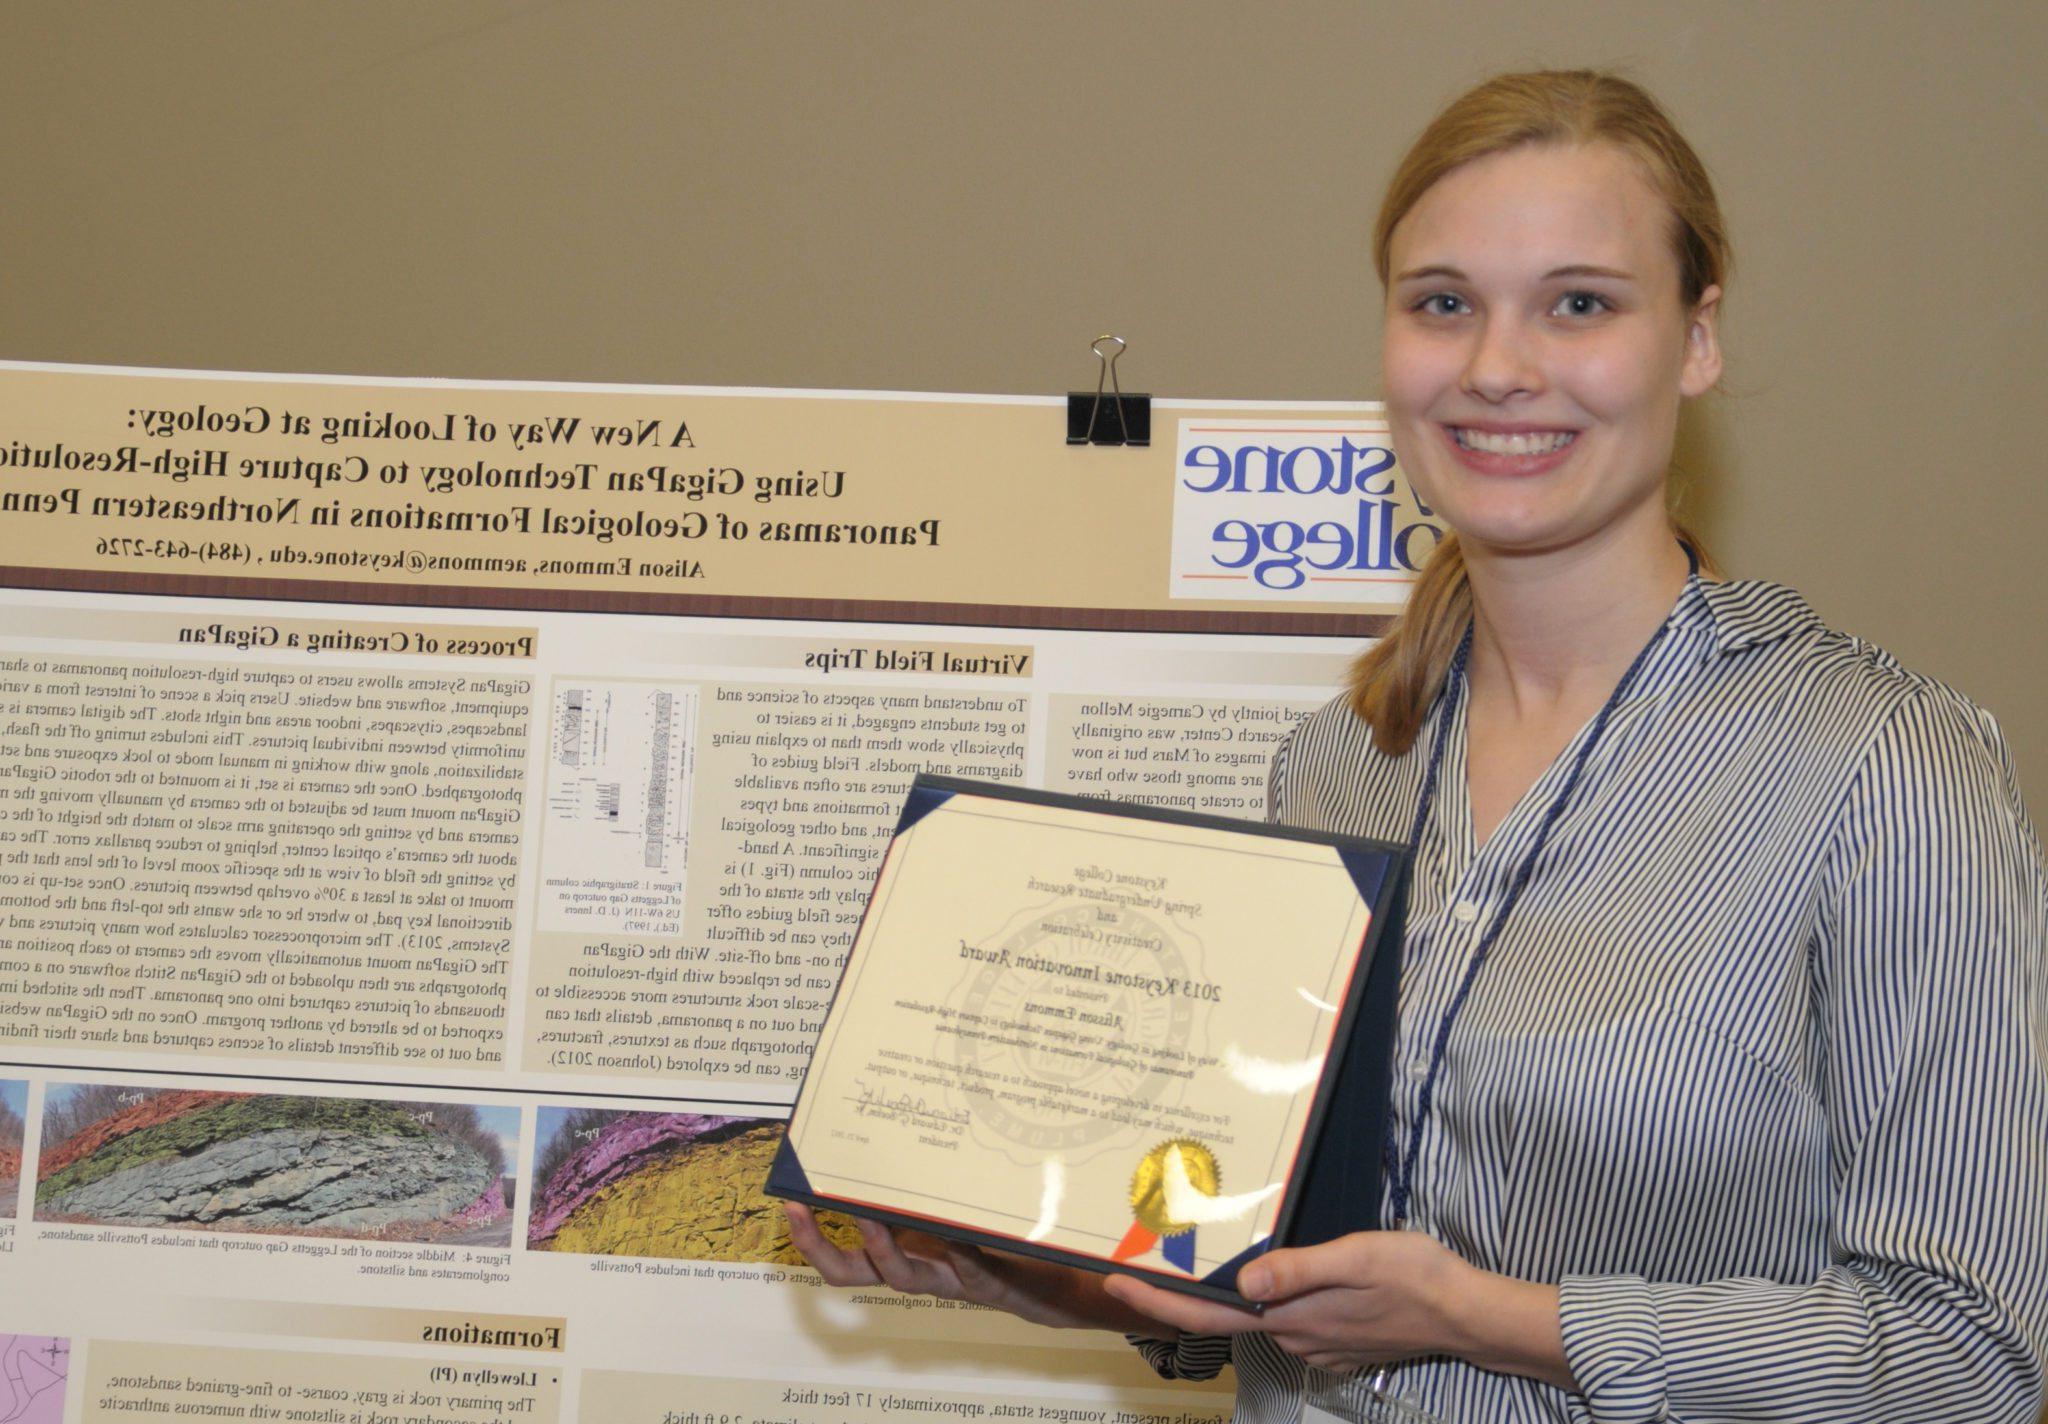 本科 geology student holds undergraduate research award,